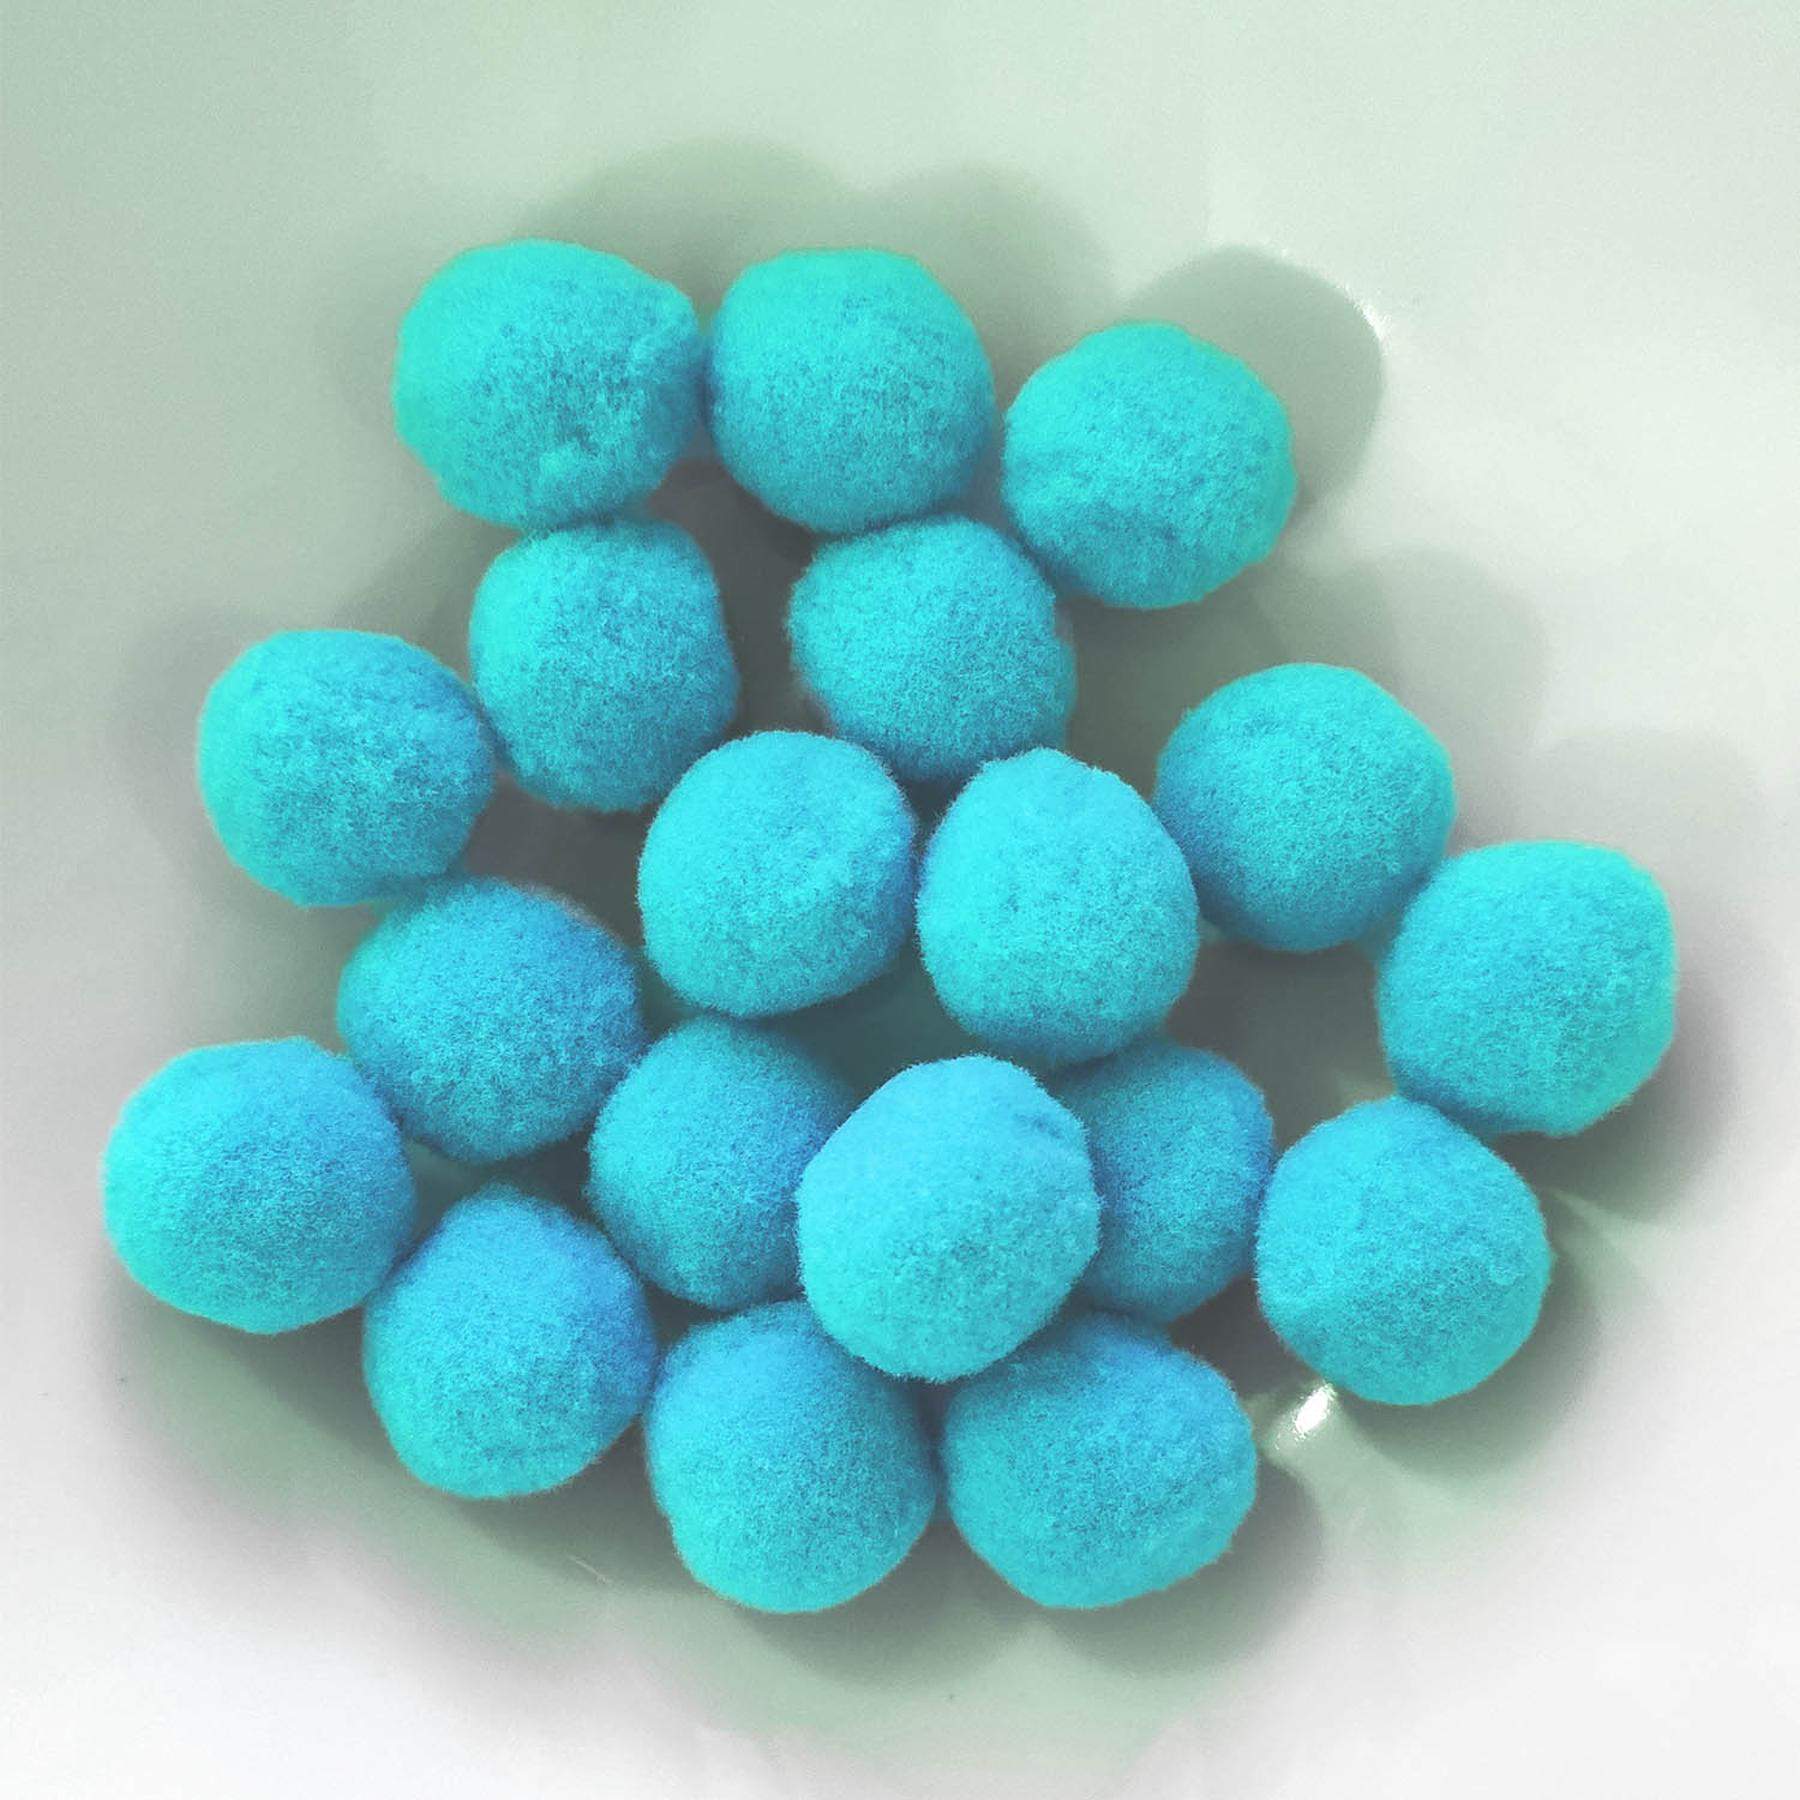 PomPon / Bälle aus Baumwolle - 25 mm / 20er Set - Blau hell / Himmelblau